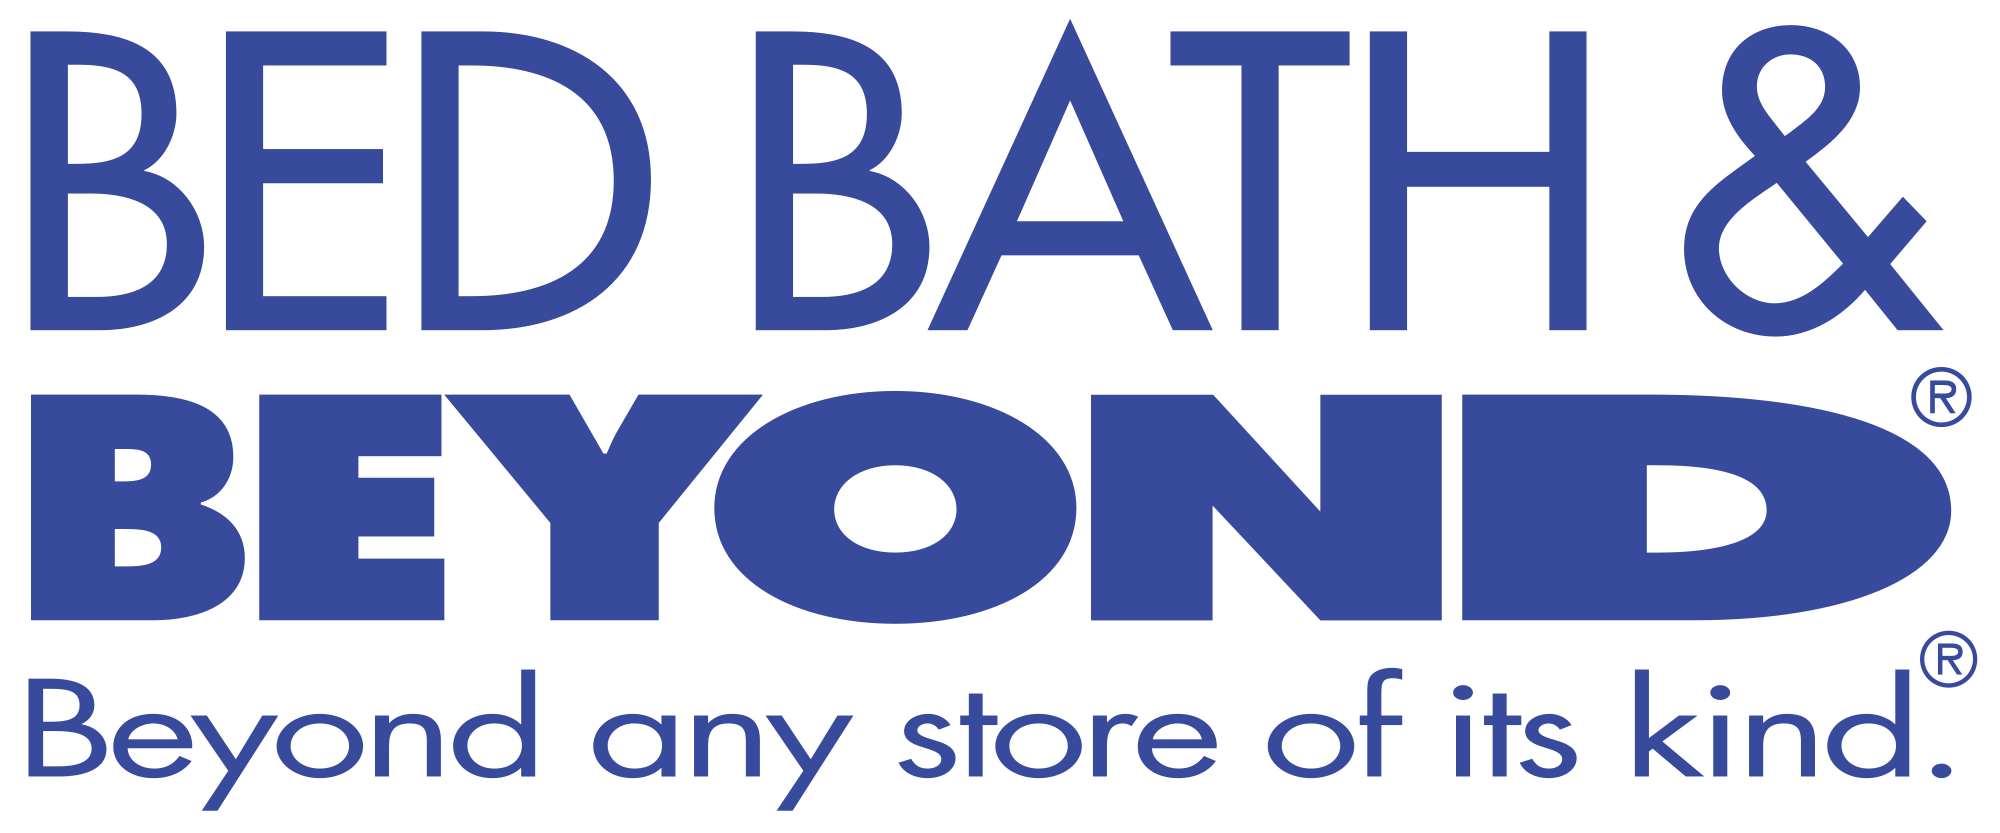 Bed Bath and Beyond Logo - File:Bedbath&beyond.svg - Wikimedia Commons